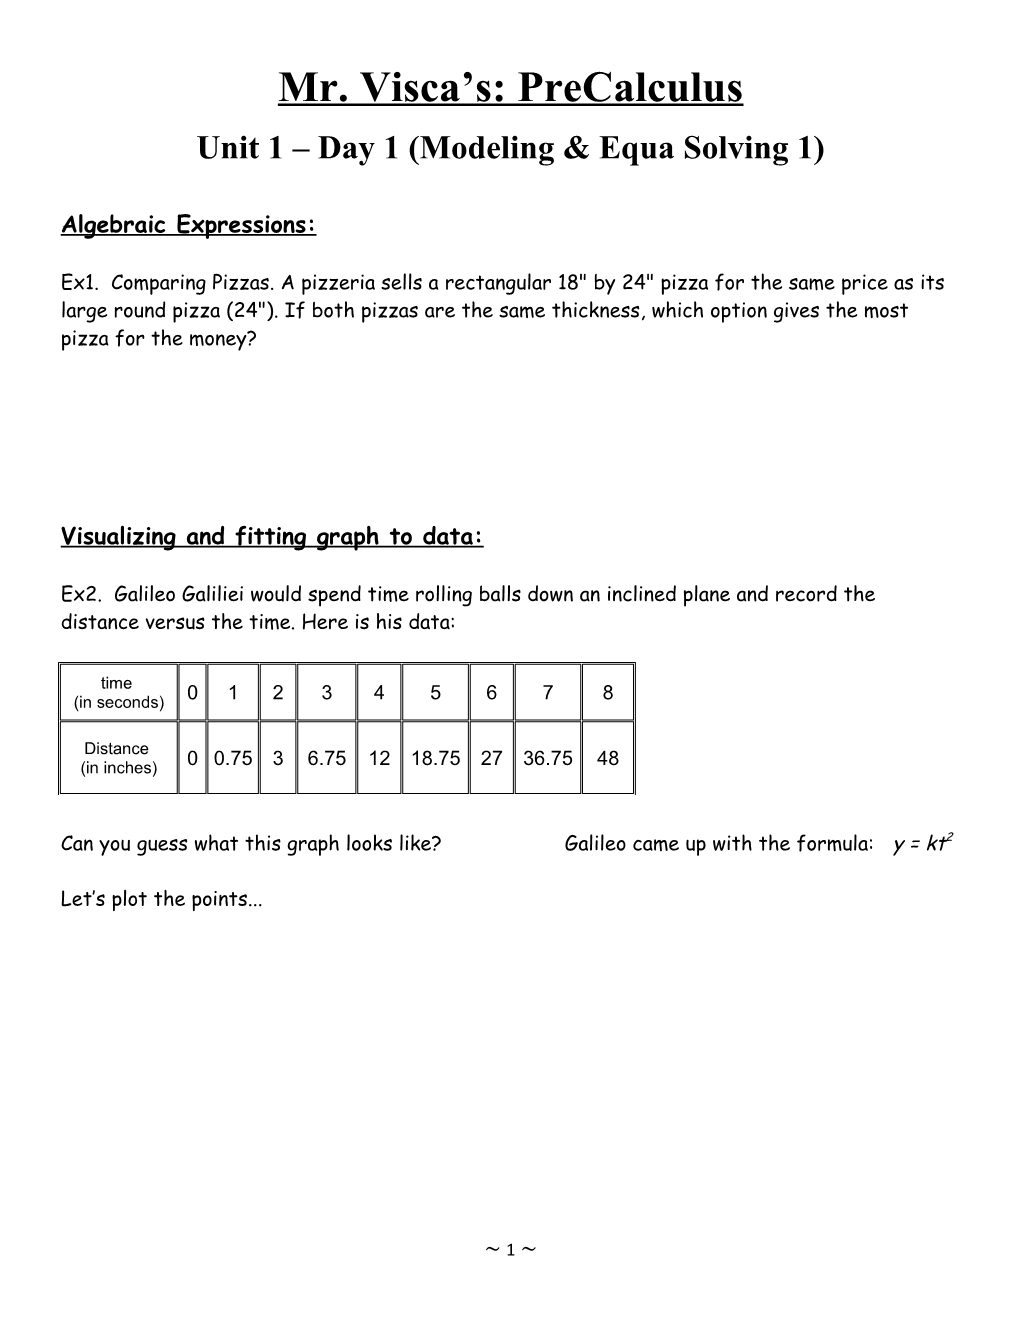 Unit 1 Day 1 (Modeling & Equa Solving 1)